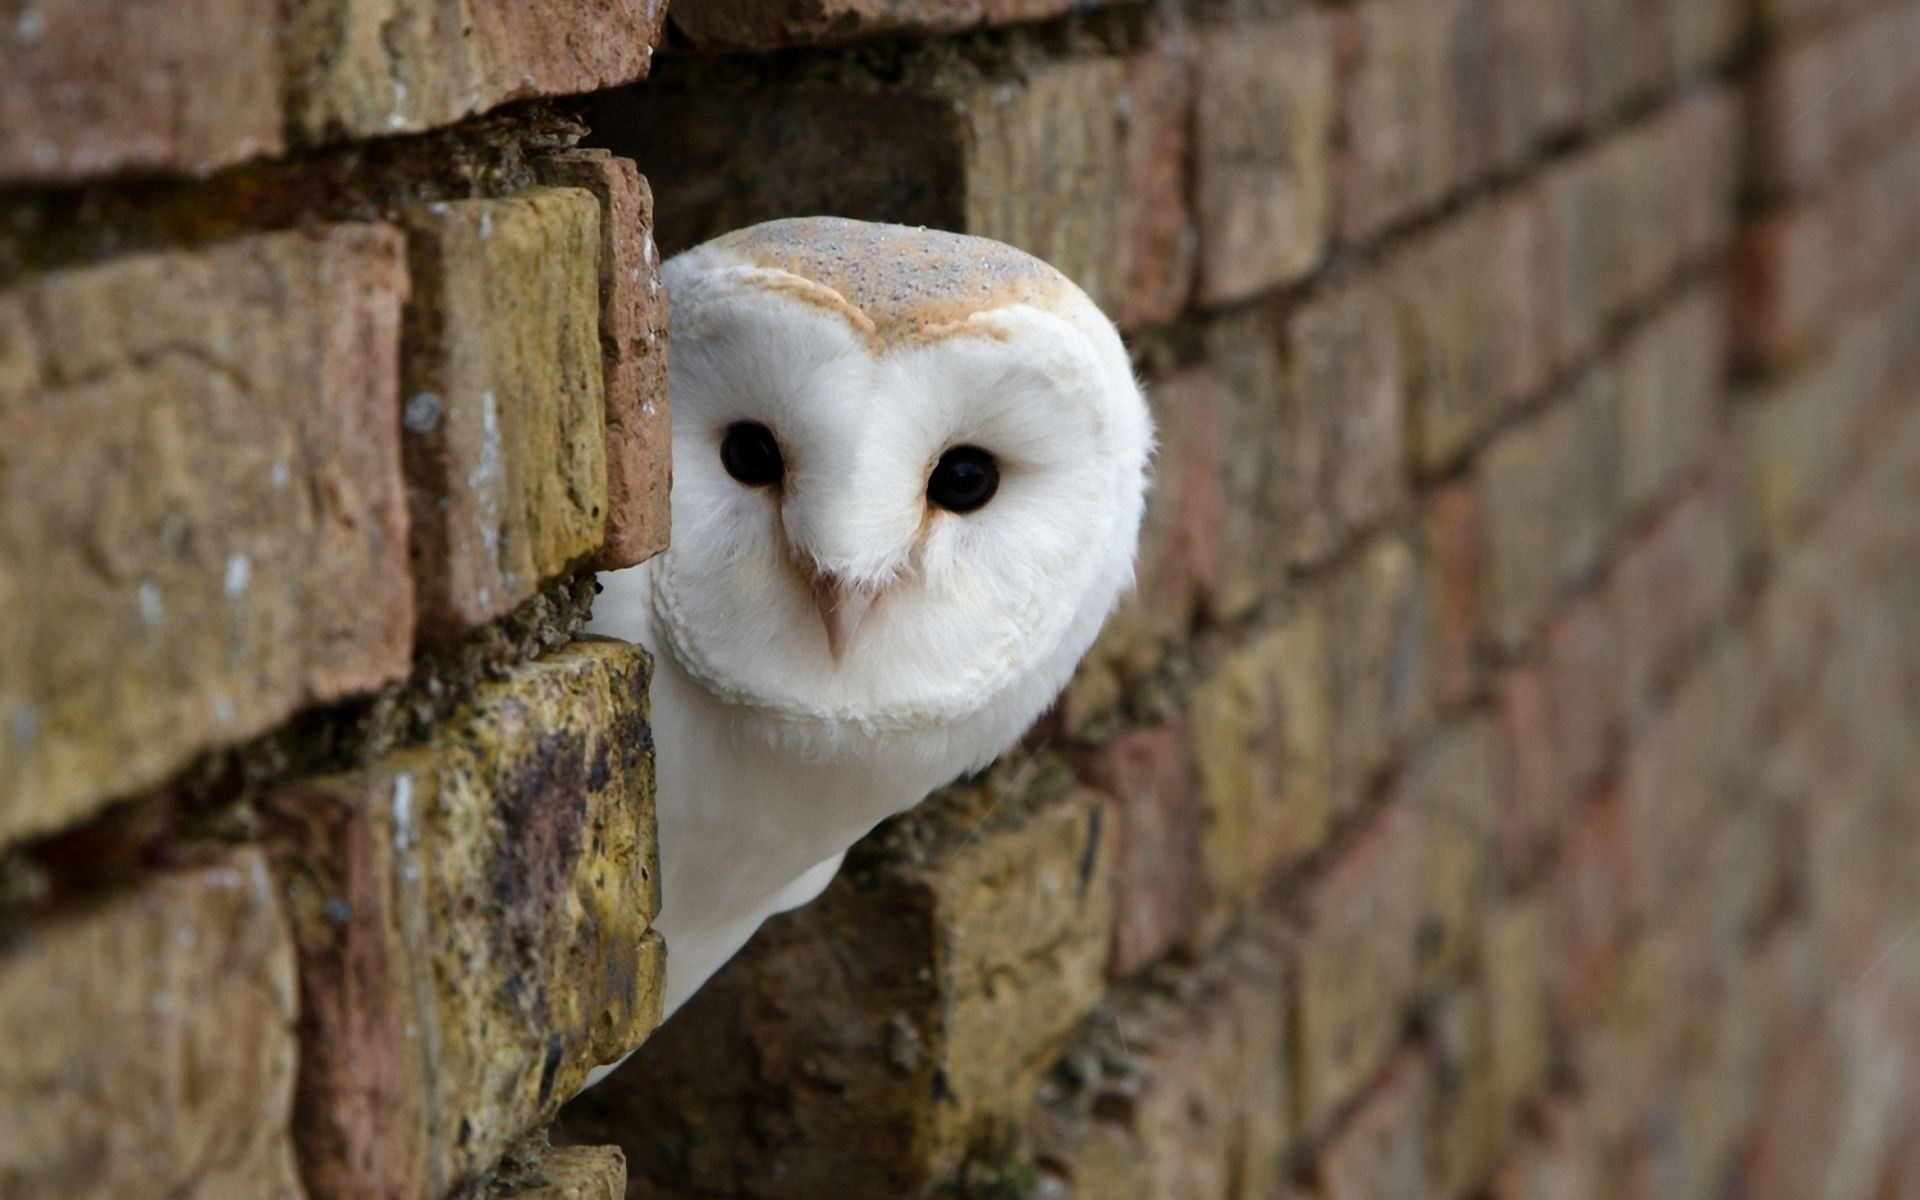  cute owl cute owls cute owl wallpaper owl bird wallpaper owl cute cute